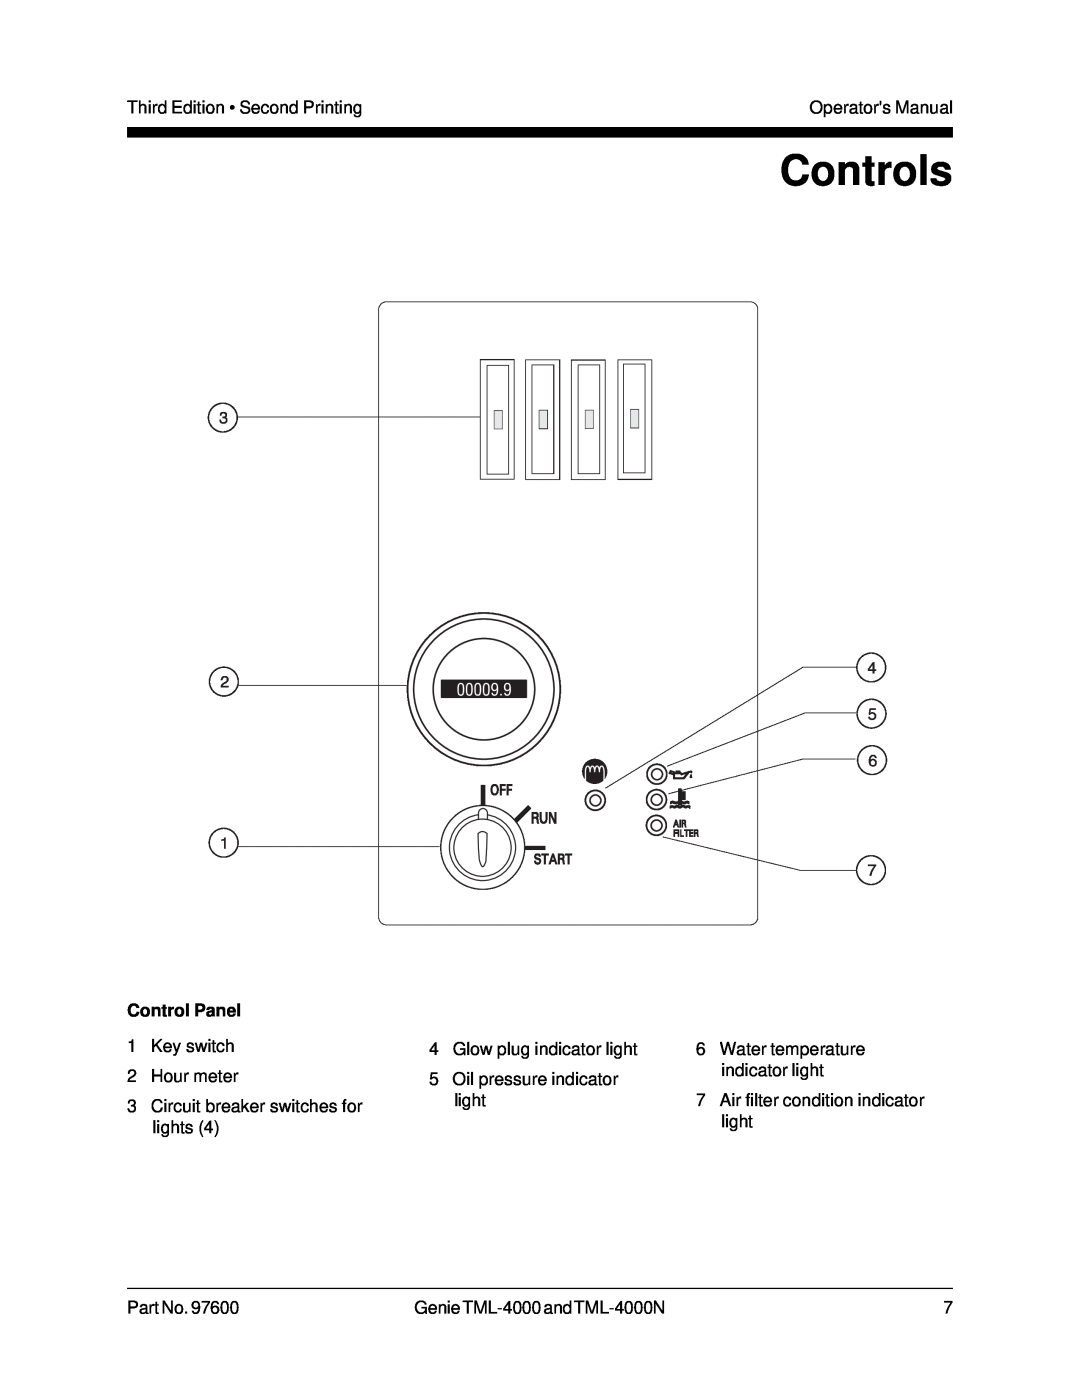 Genie TML-4000N manual Controls, Control Panel, 00009.9, Filter 